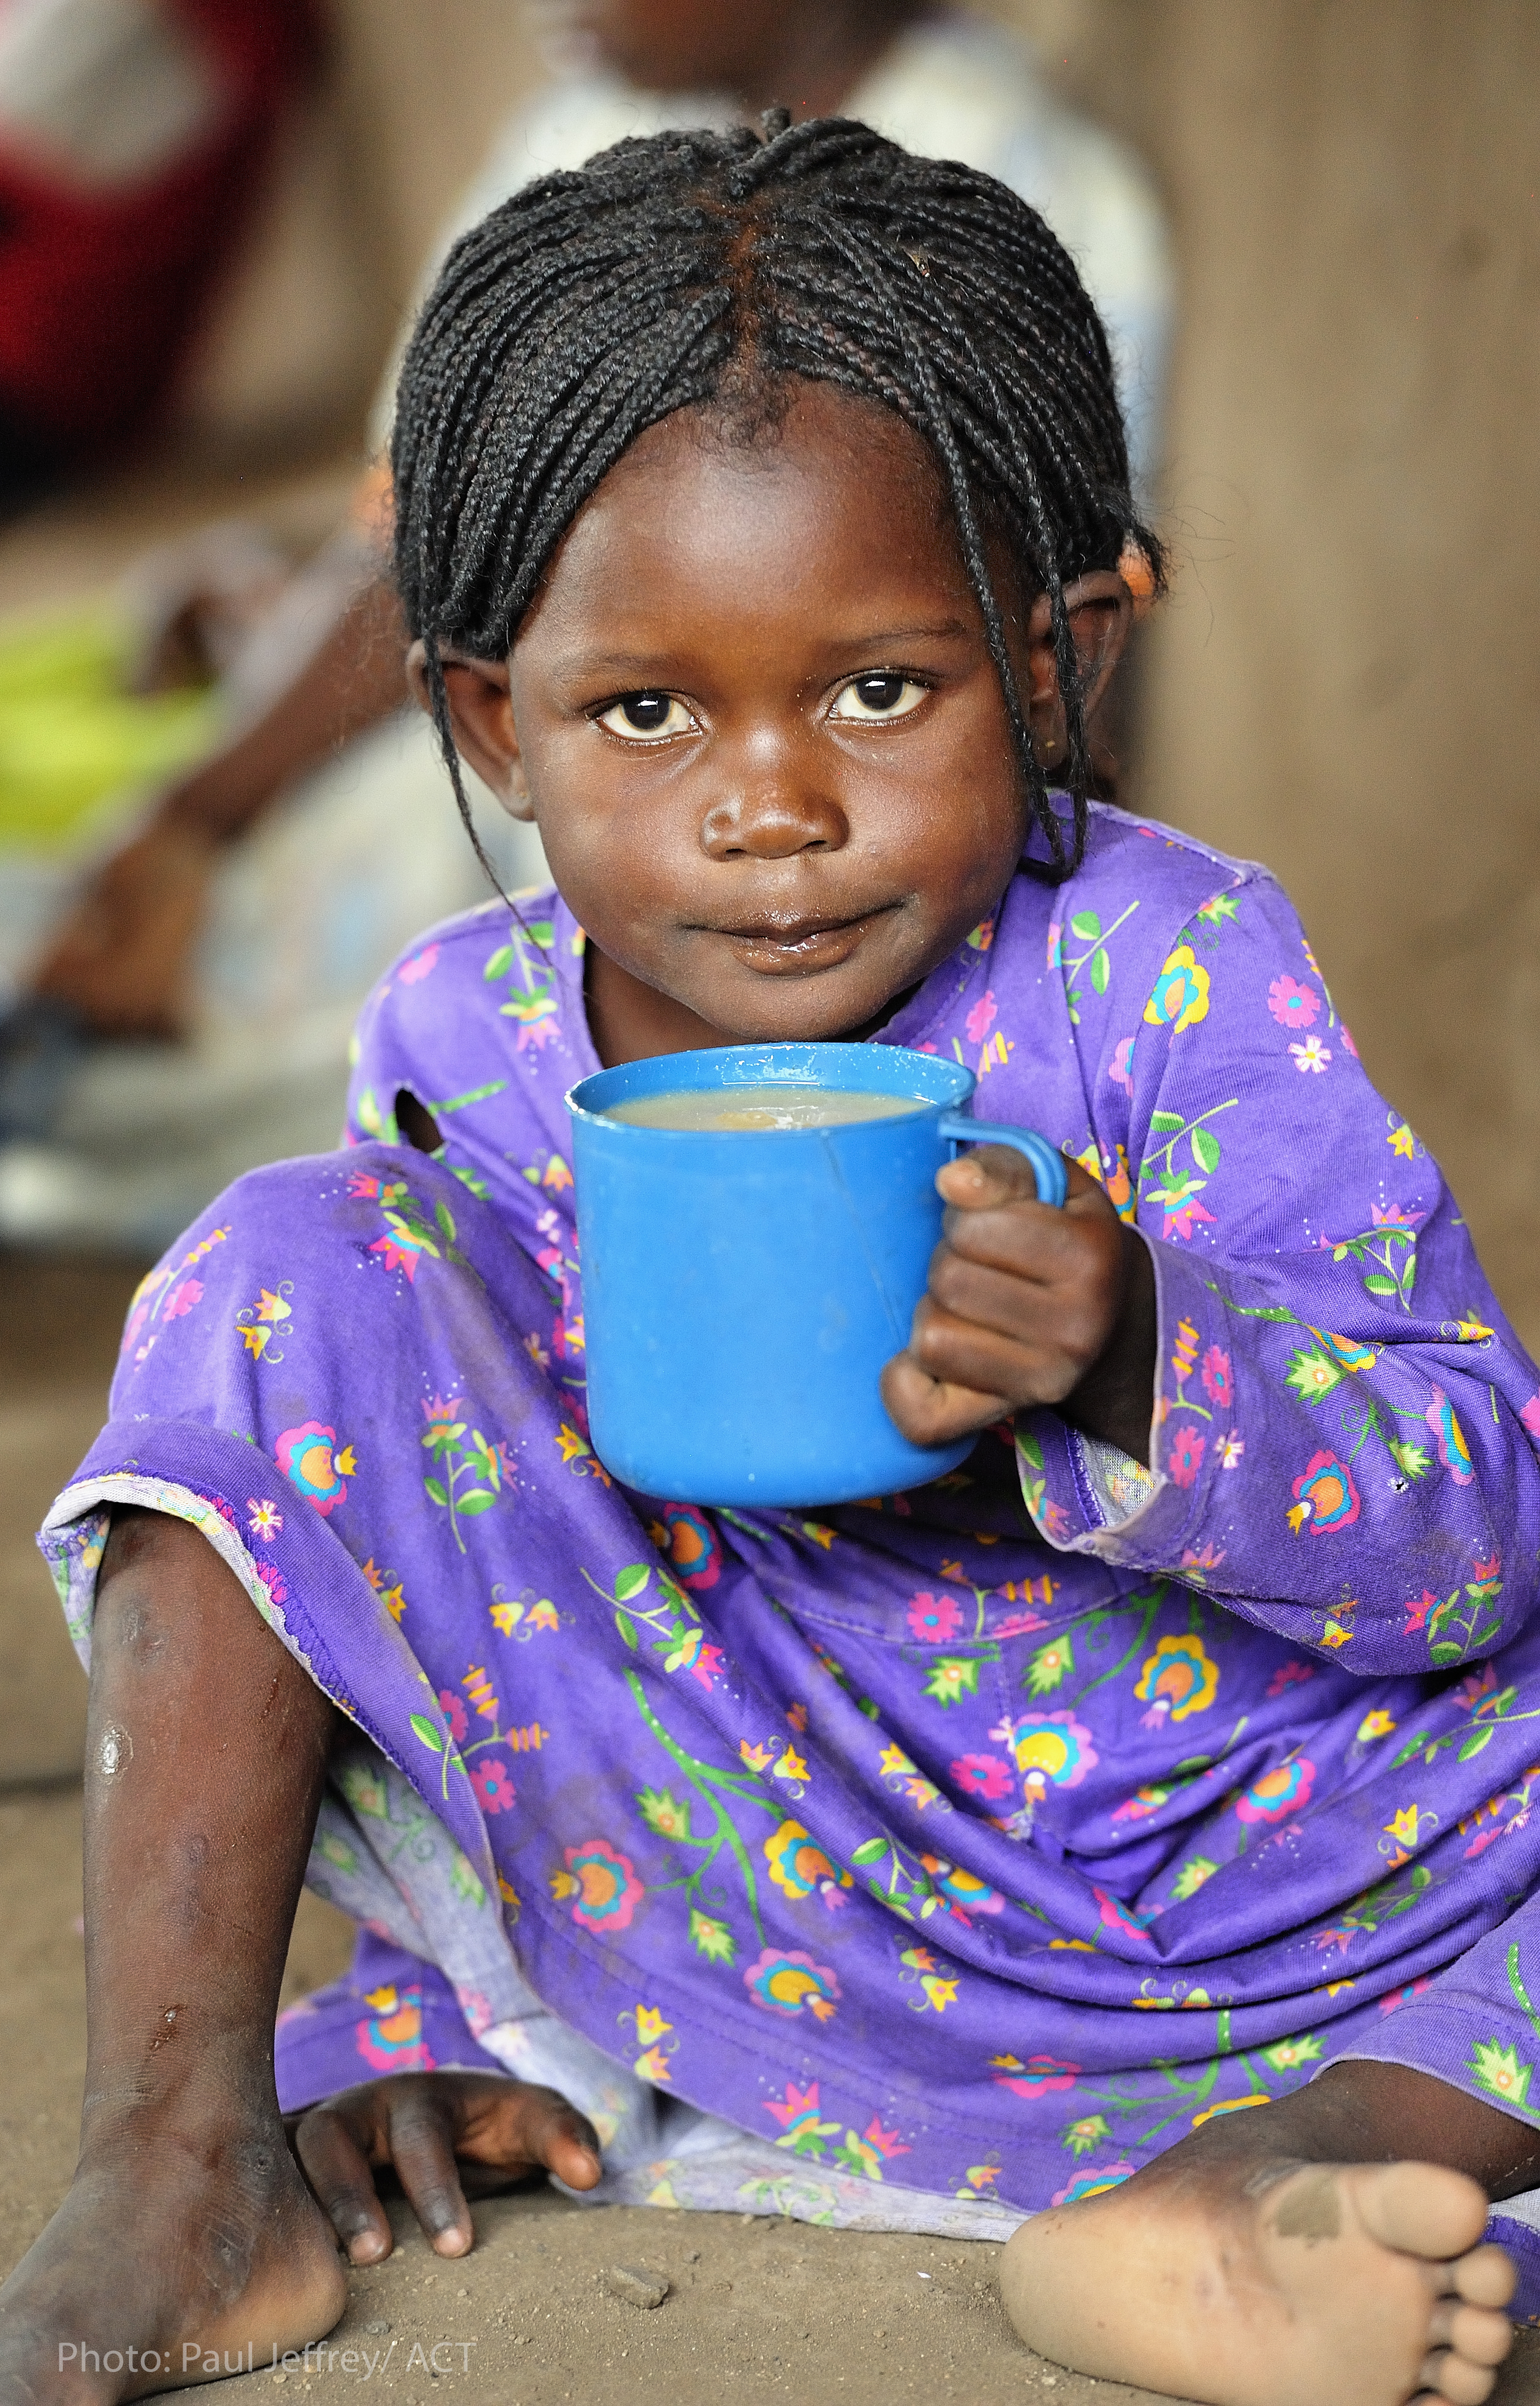 Villages works for food security for Malawi children